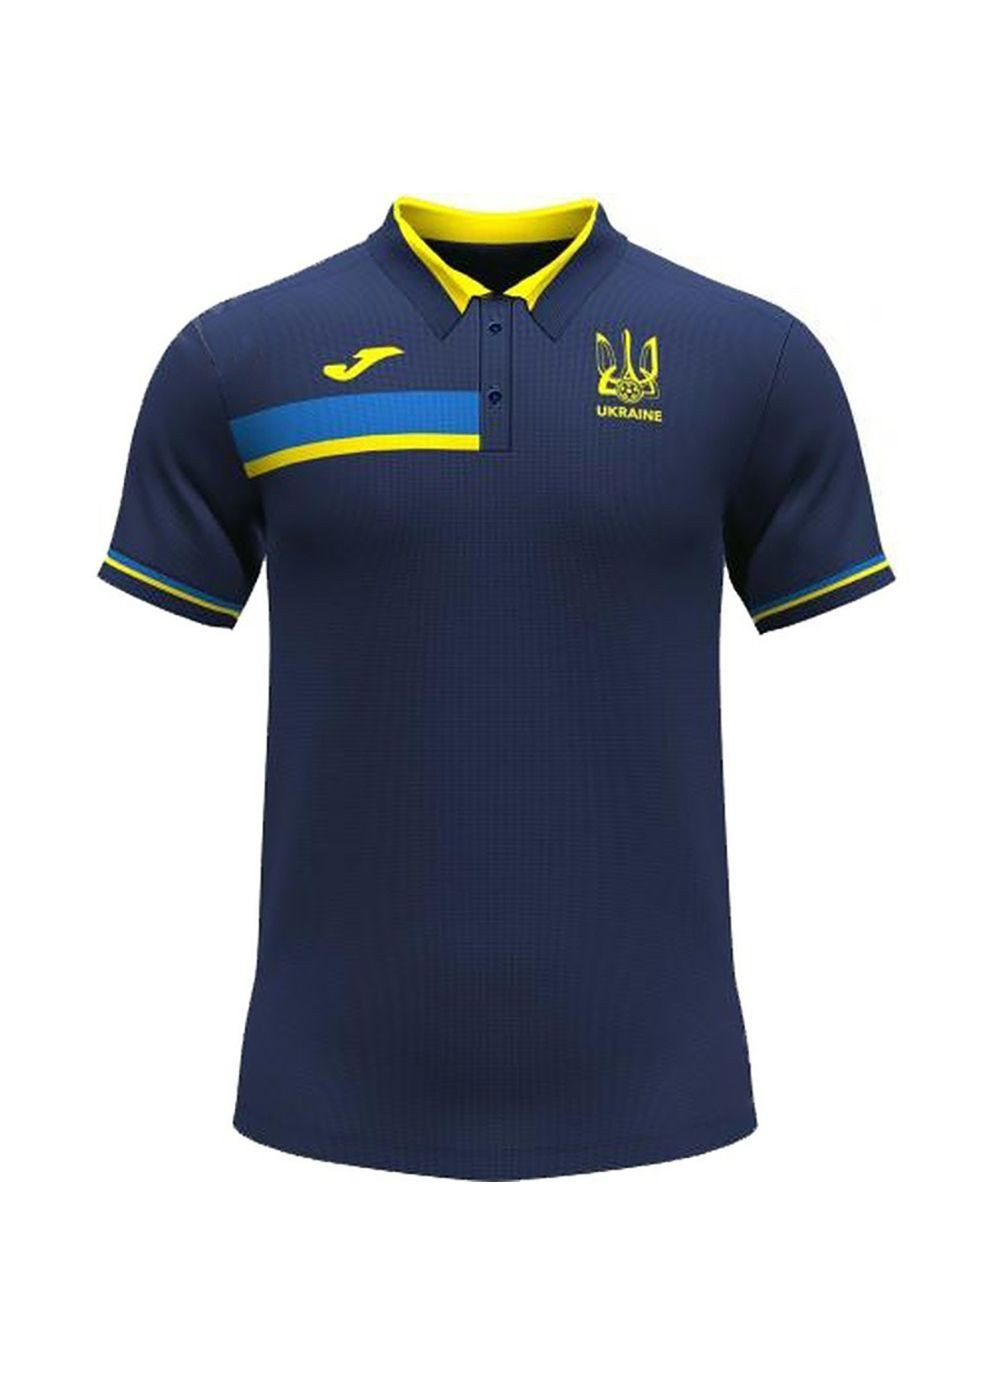 Темно-синяя футболка-мужское поло ukraine 2021 темно-синий для мужчин Joma